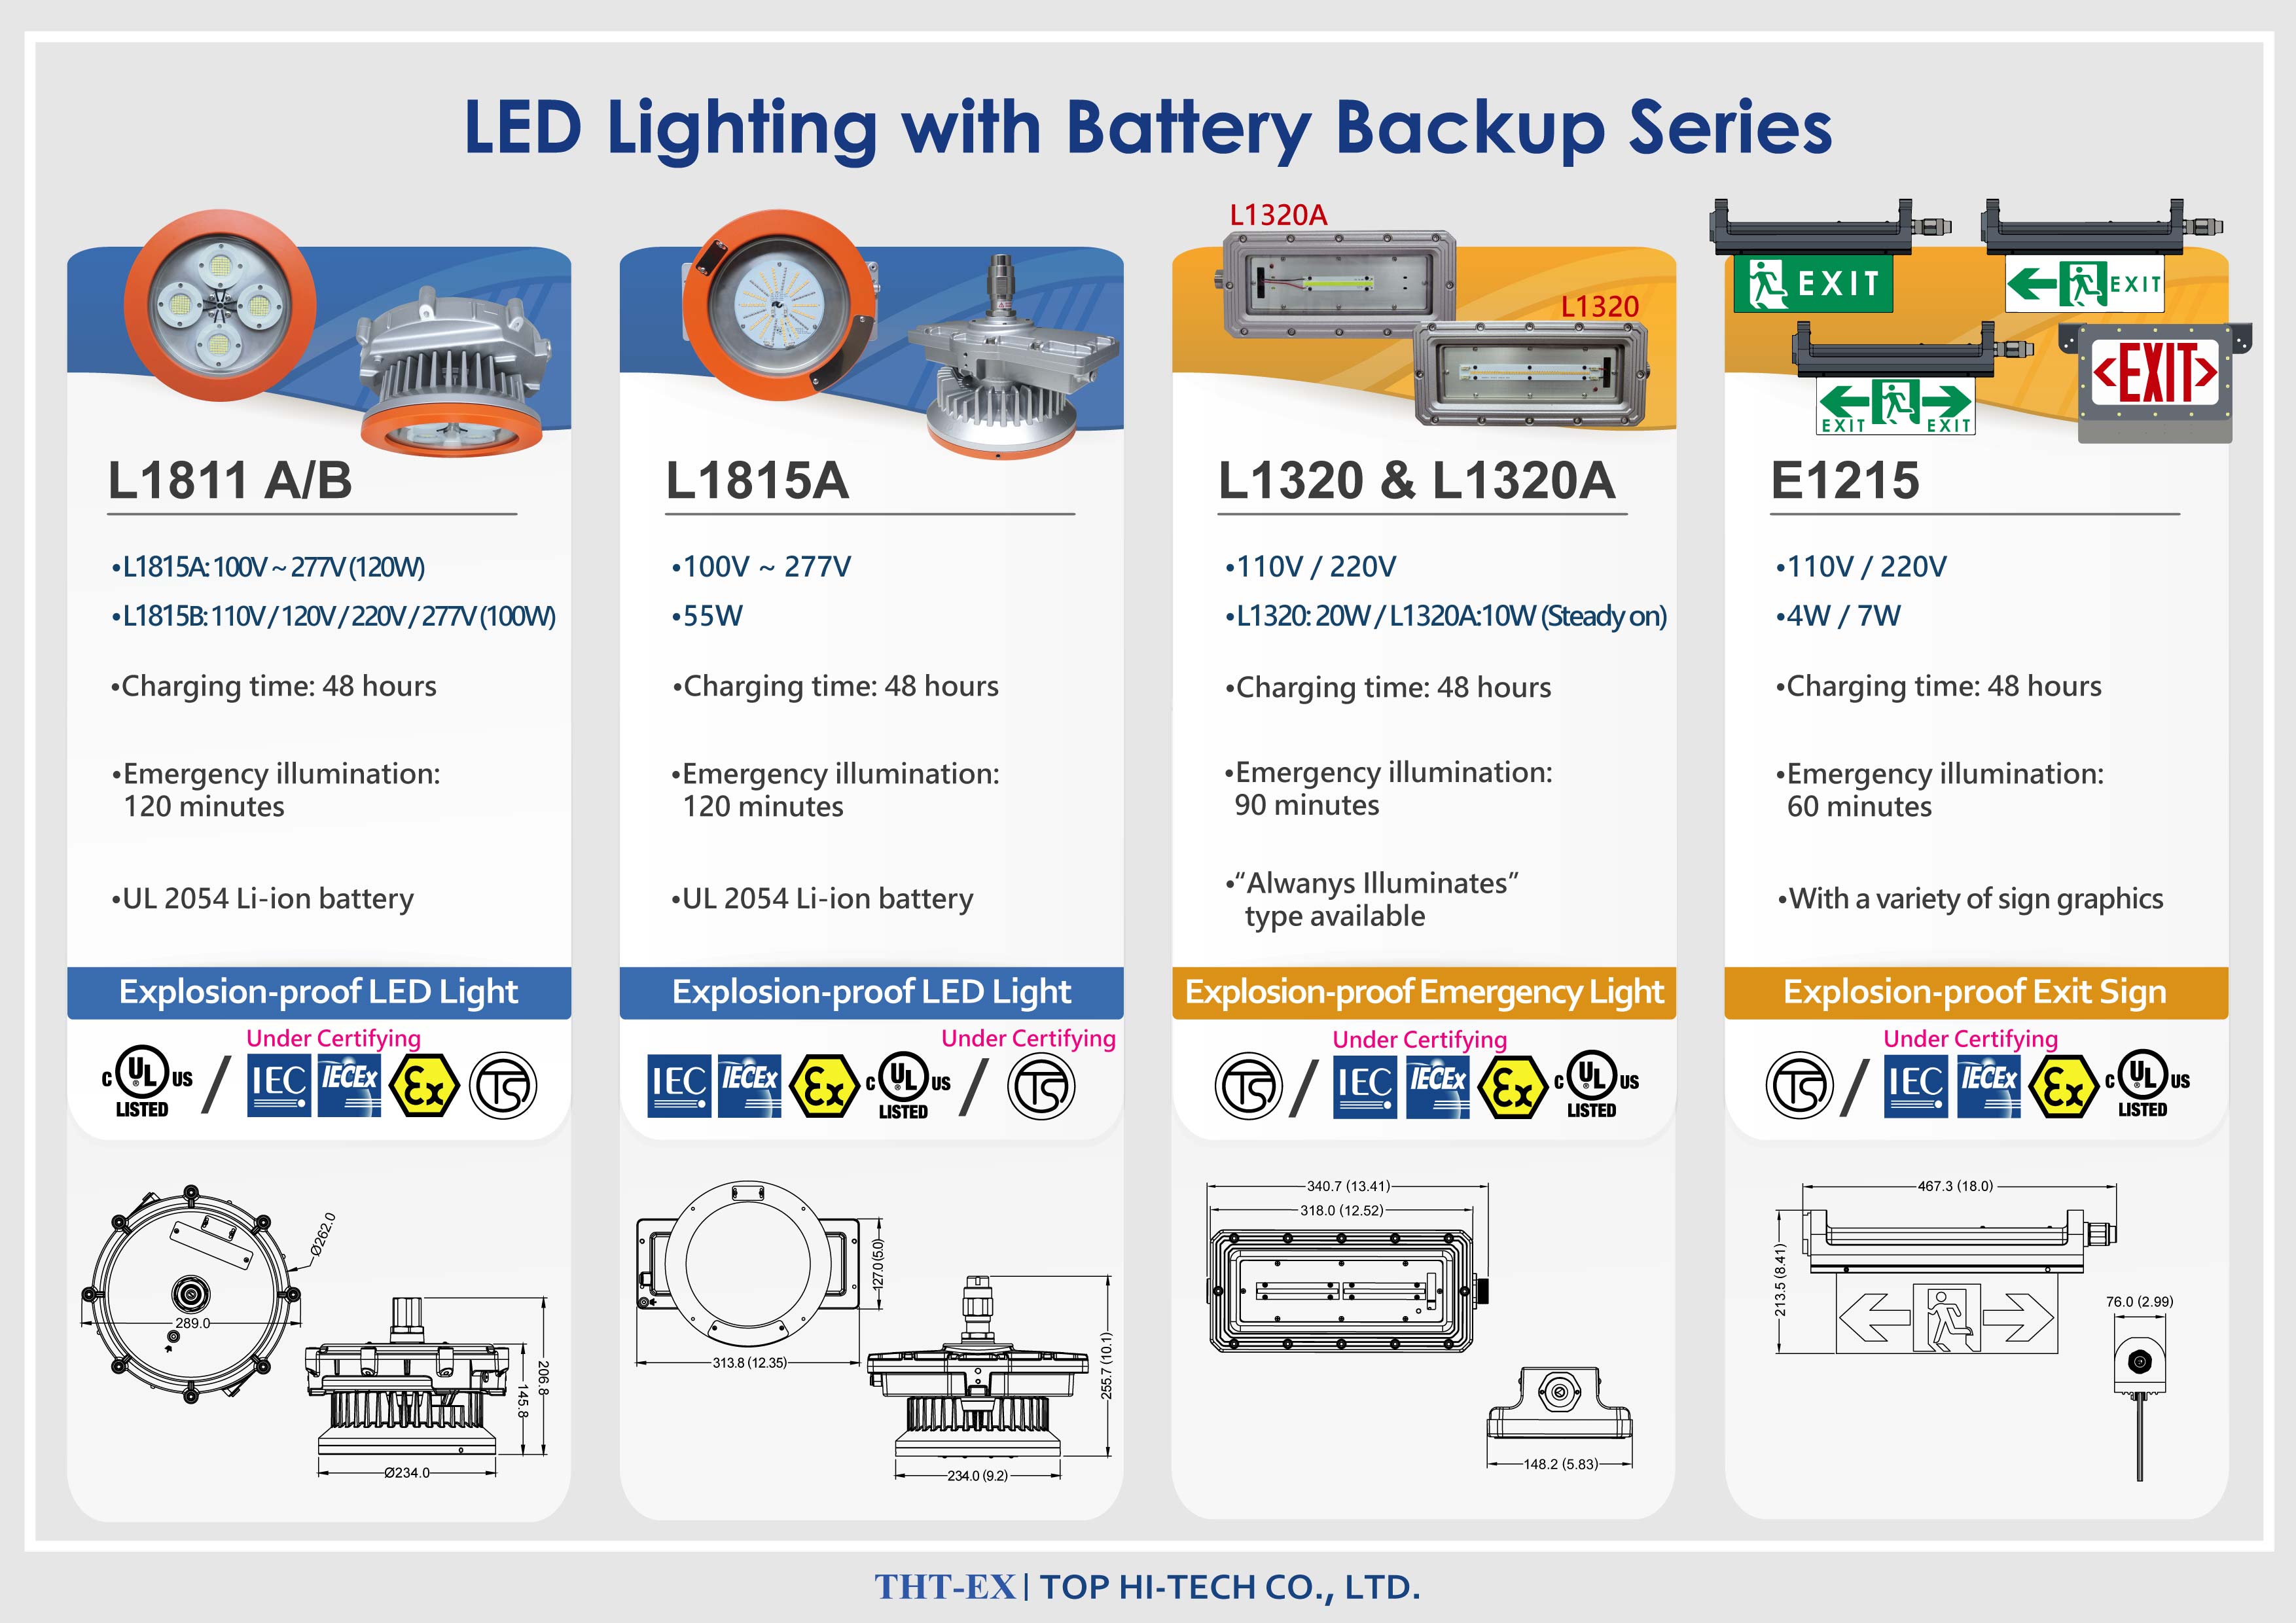 New! Explosion Proof & Battery Backup LED Light - Provide Up to 2 hrs Emergency Illumination!